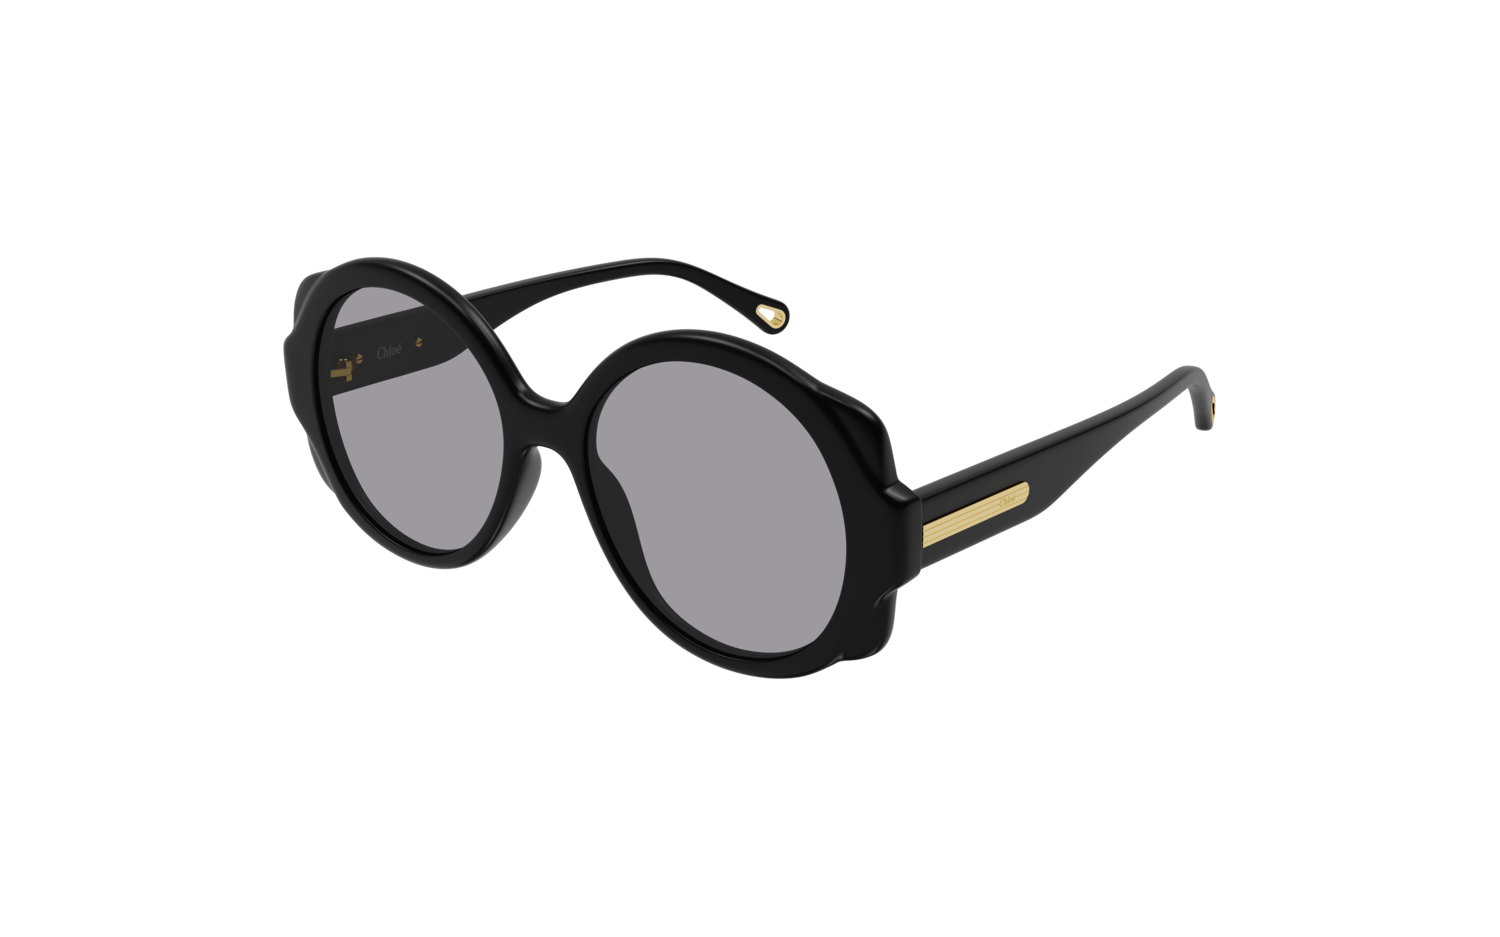 Brown Mirtha round recycled-plastic sunglasses, Chloé